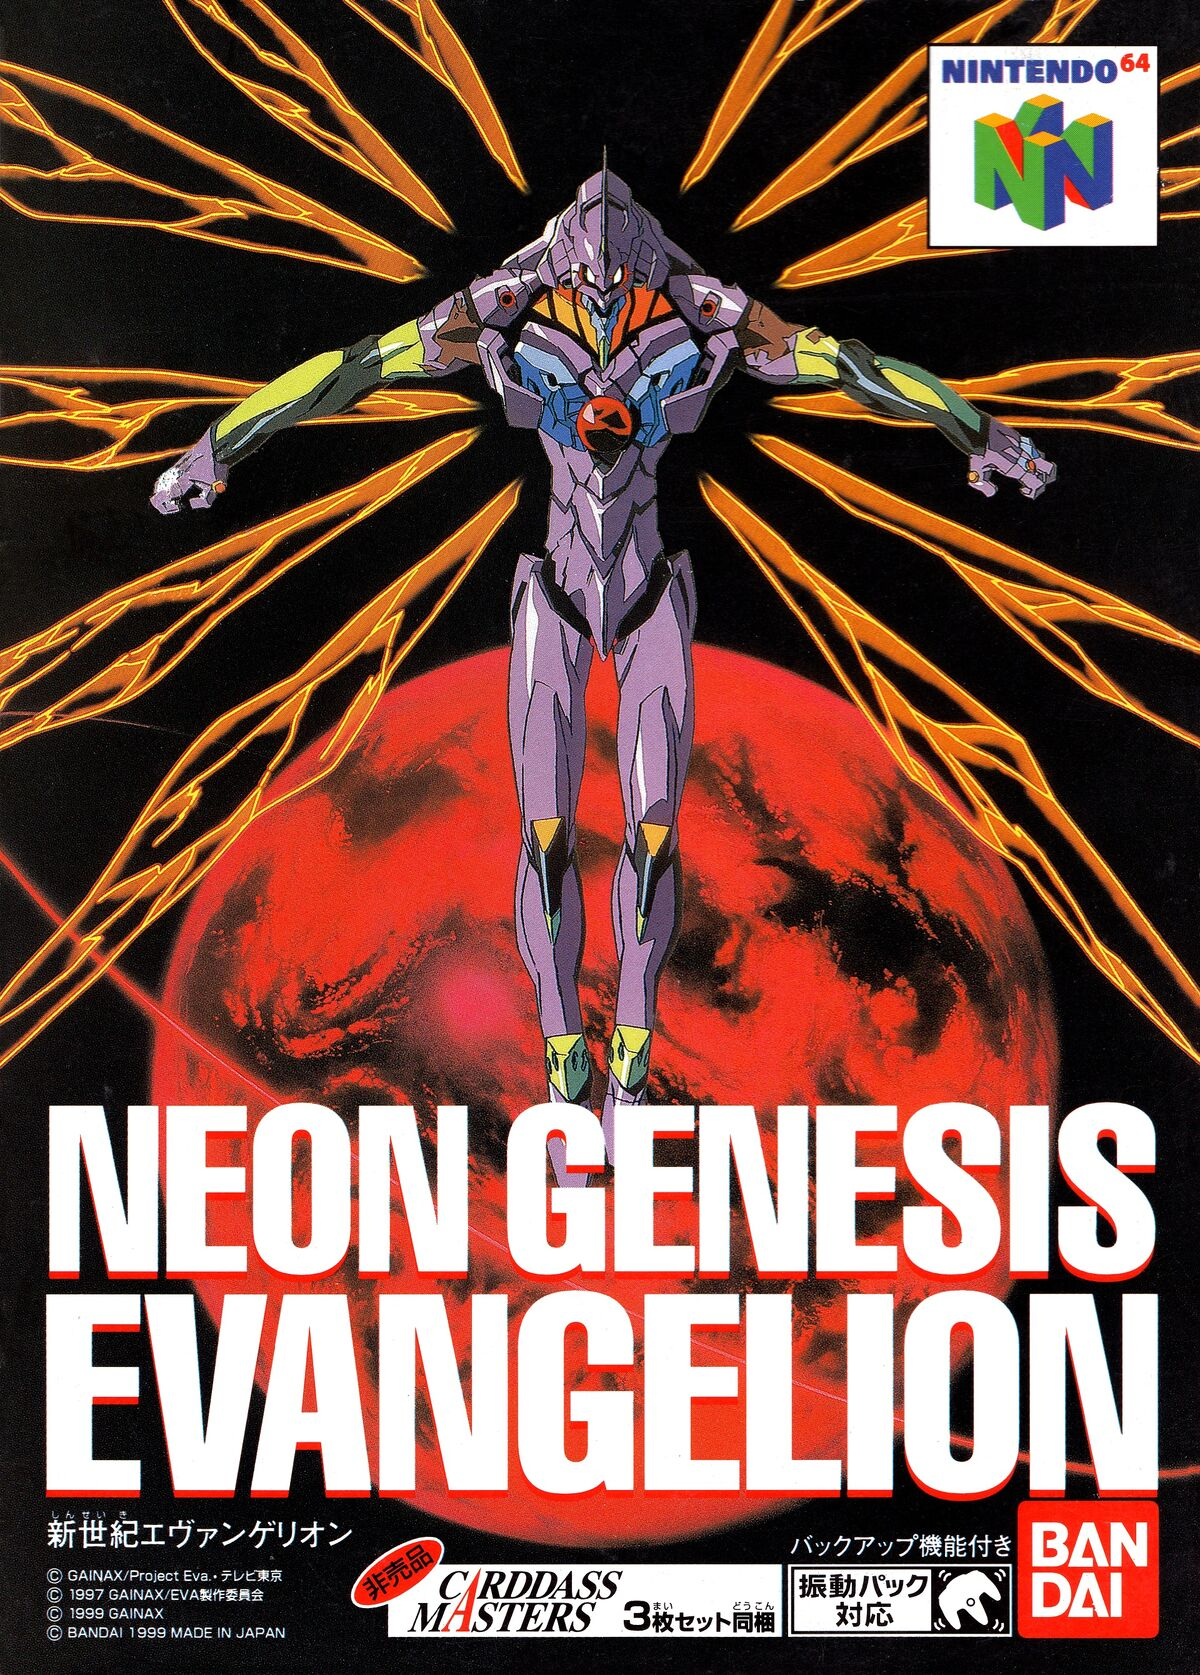 Neon Genesis Evangelion (Nintendo 64) | Evangelion | Fandom